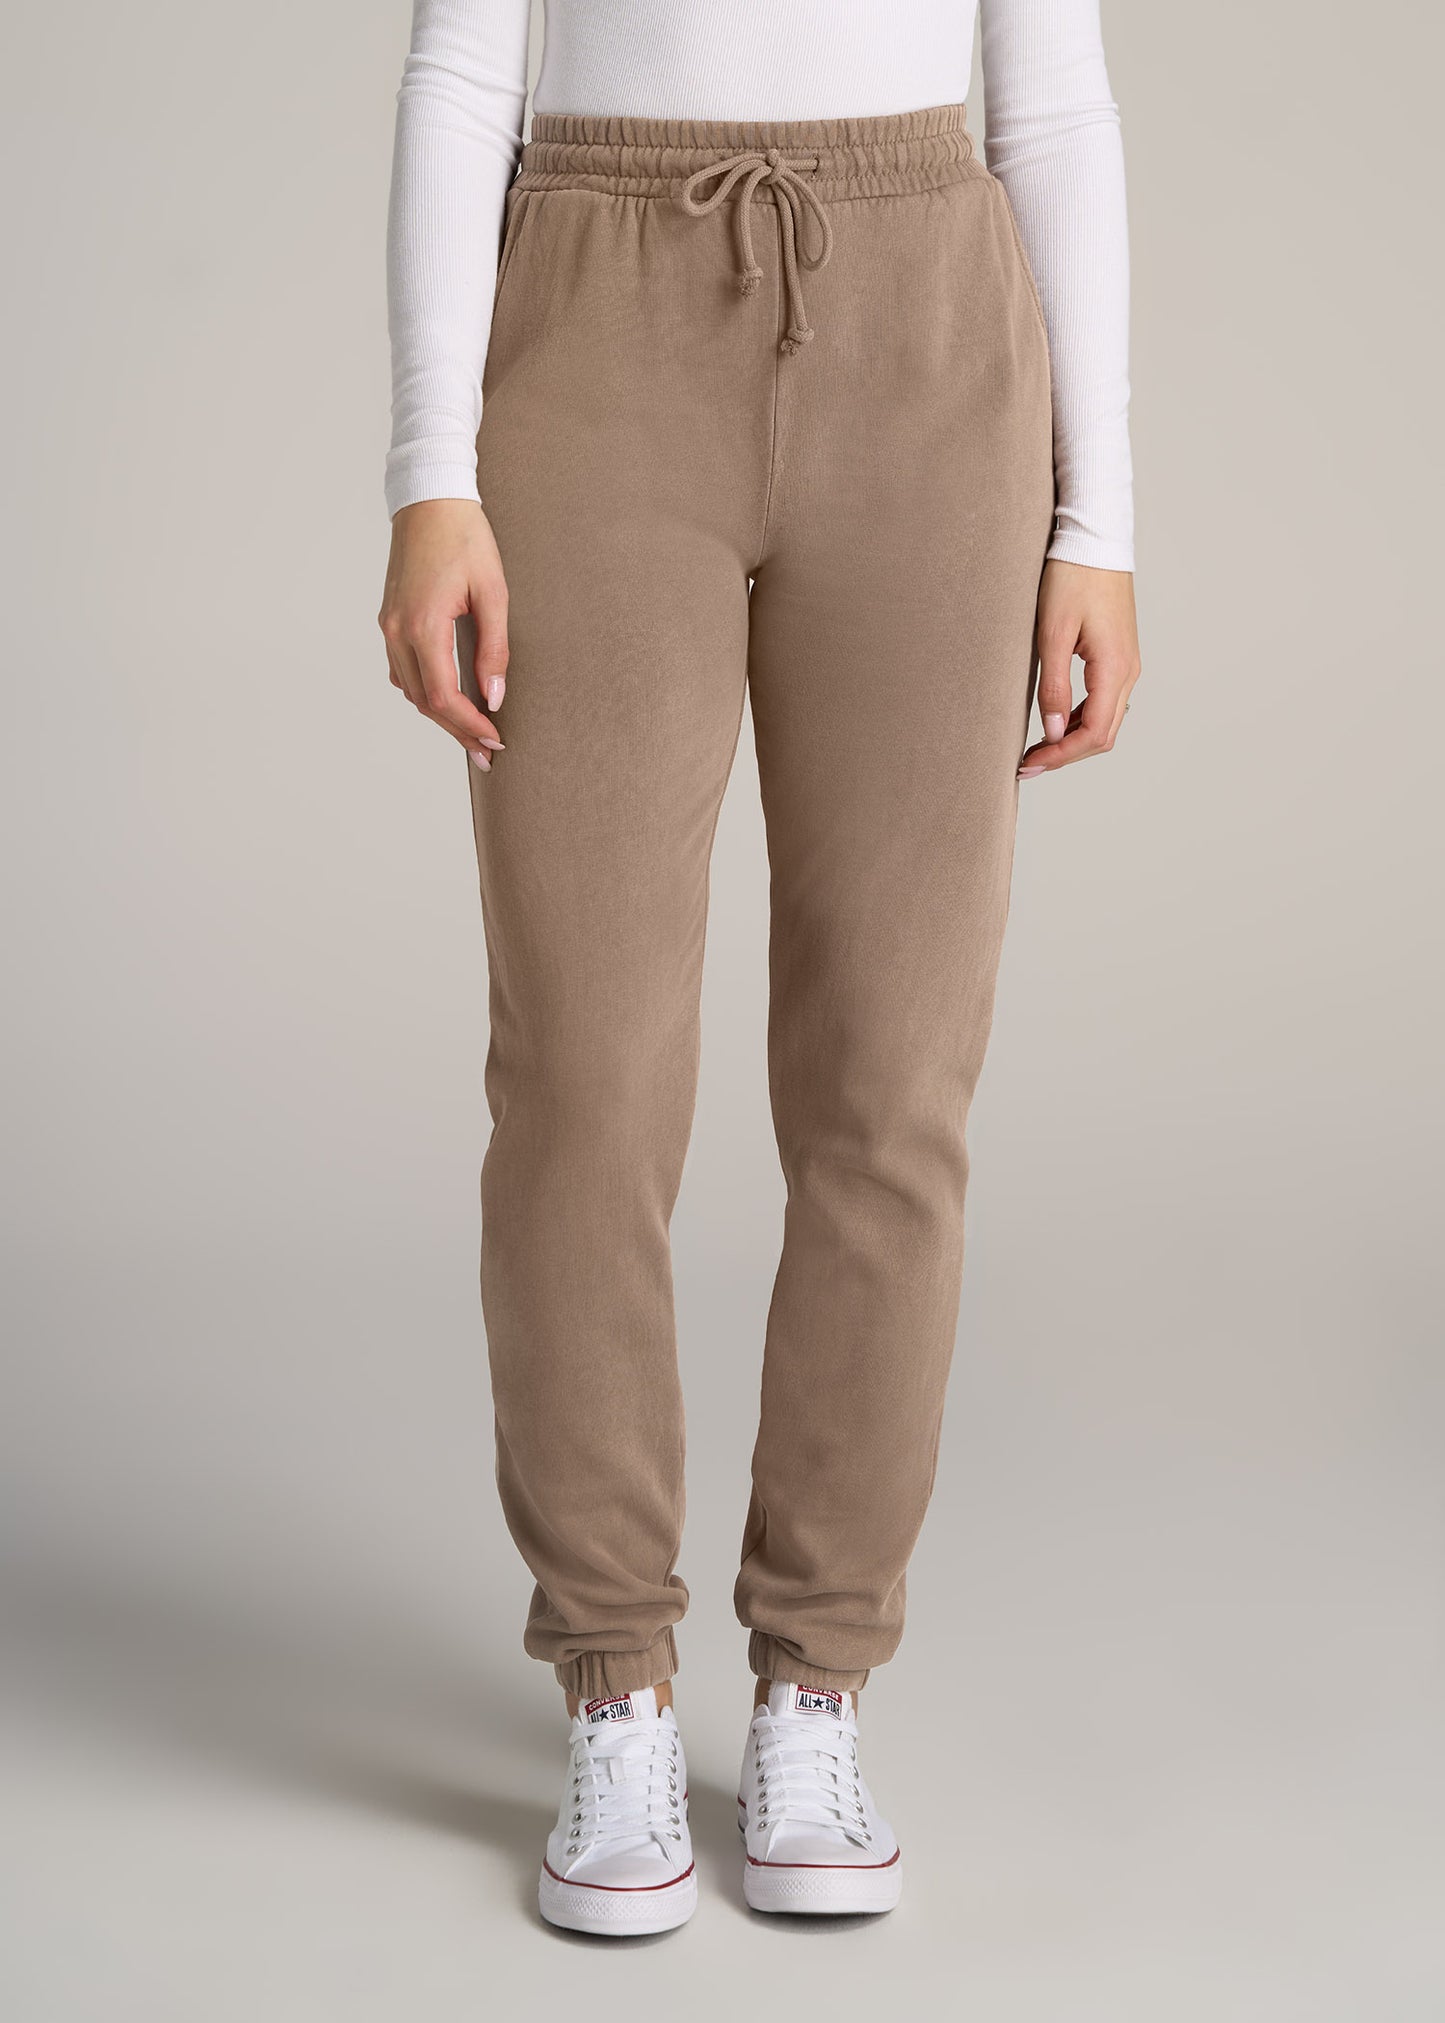 Comfort Colors 1469 - Garment-Dyed Lightweight Fleece Sweatpants